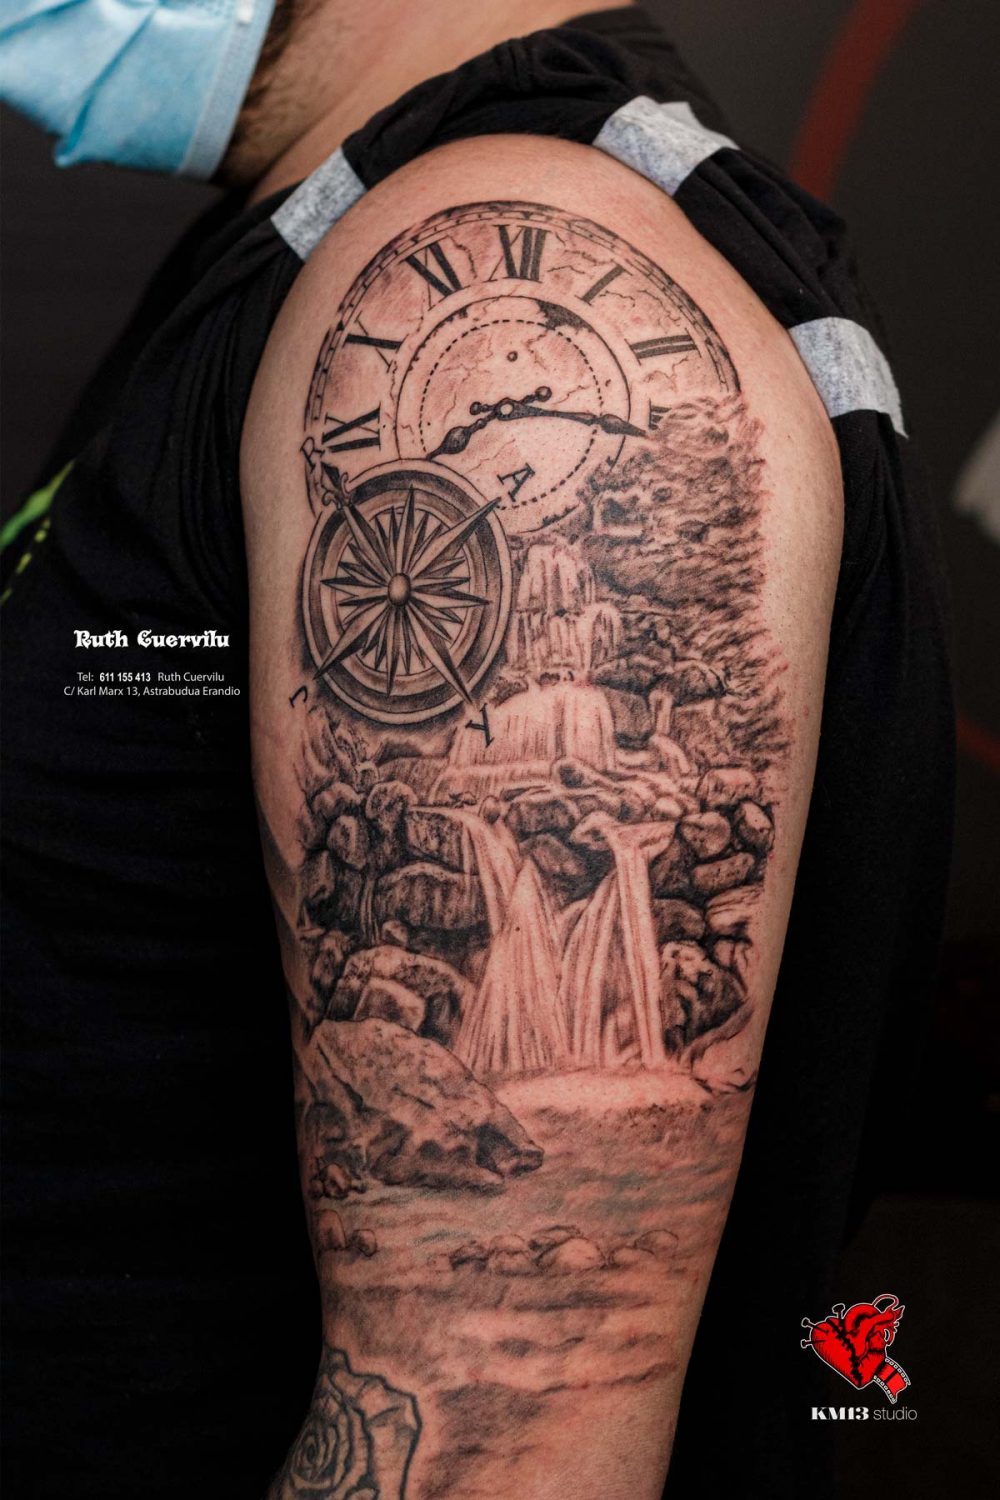 Tatuaje Reloj Rio y Catarata Realismo - Ruth Cuervilu Tattoo - KM13 Studio - estudio de tatuajes erandio astrabudua bilbao bizkaia